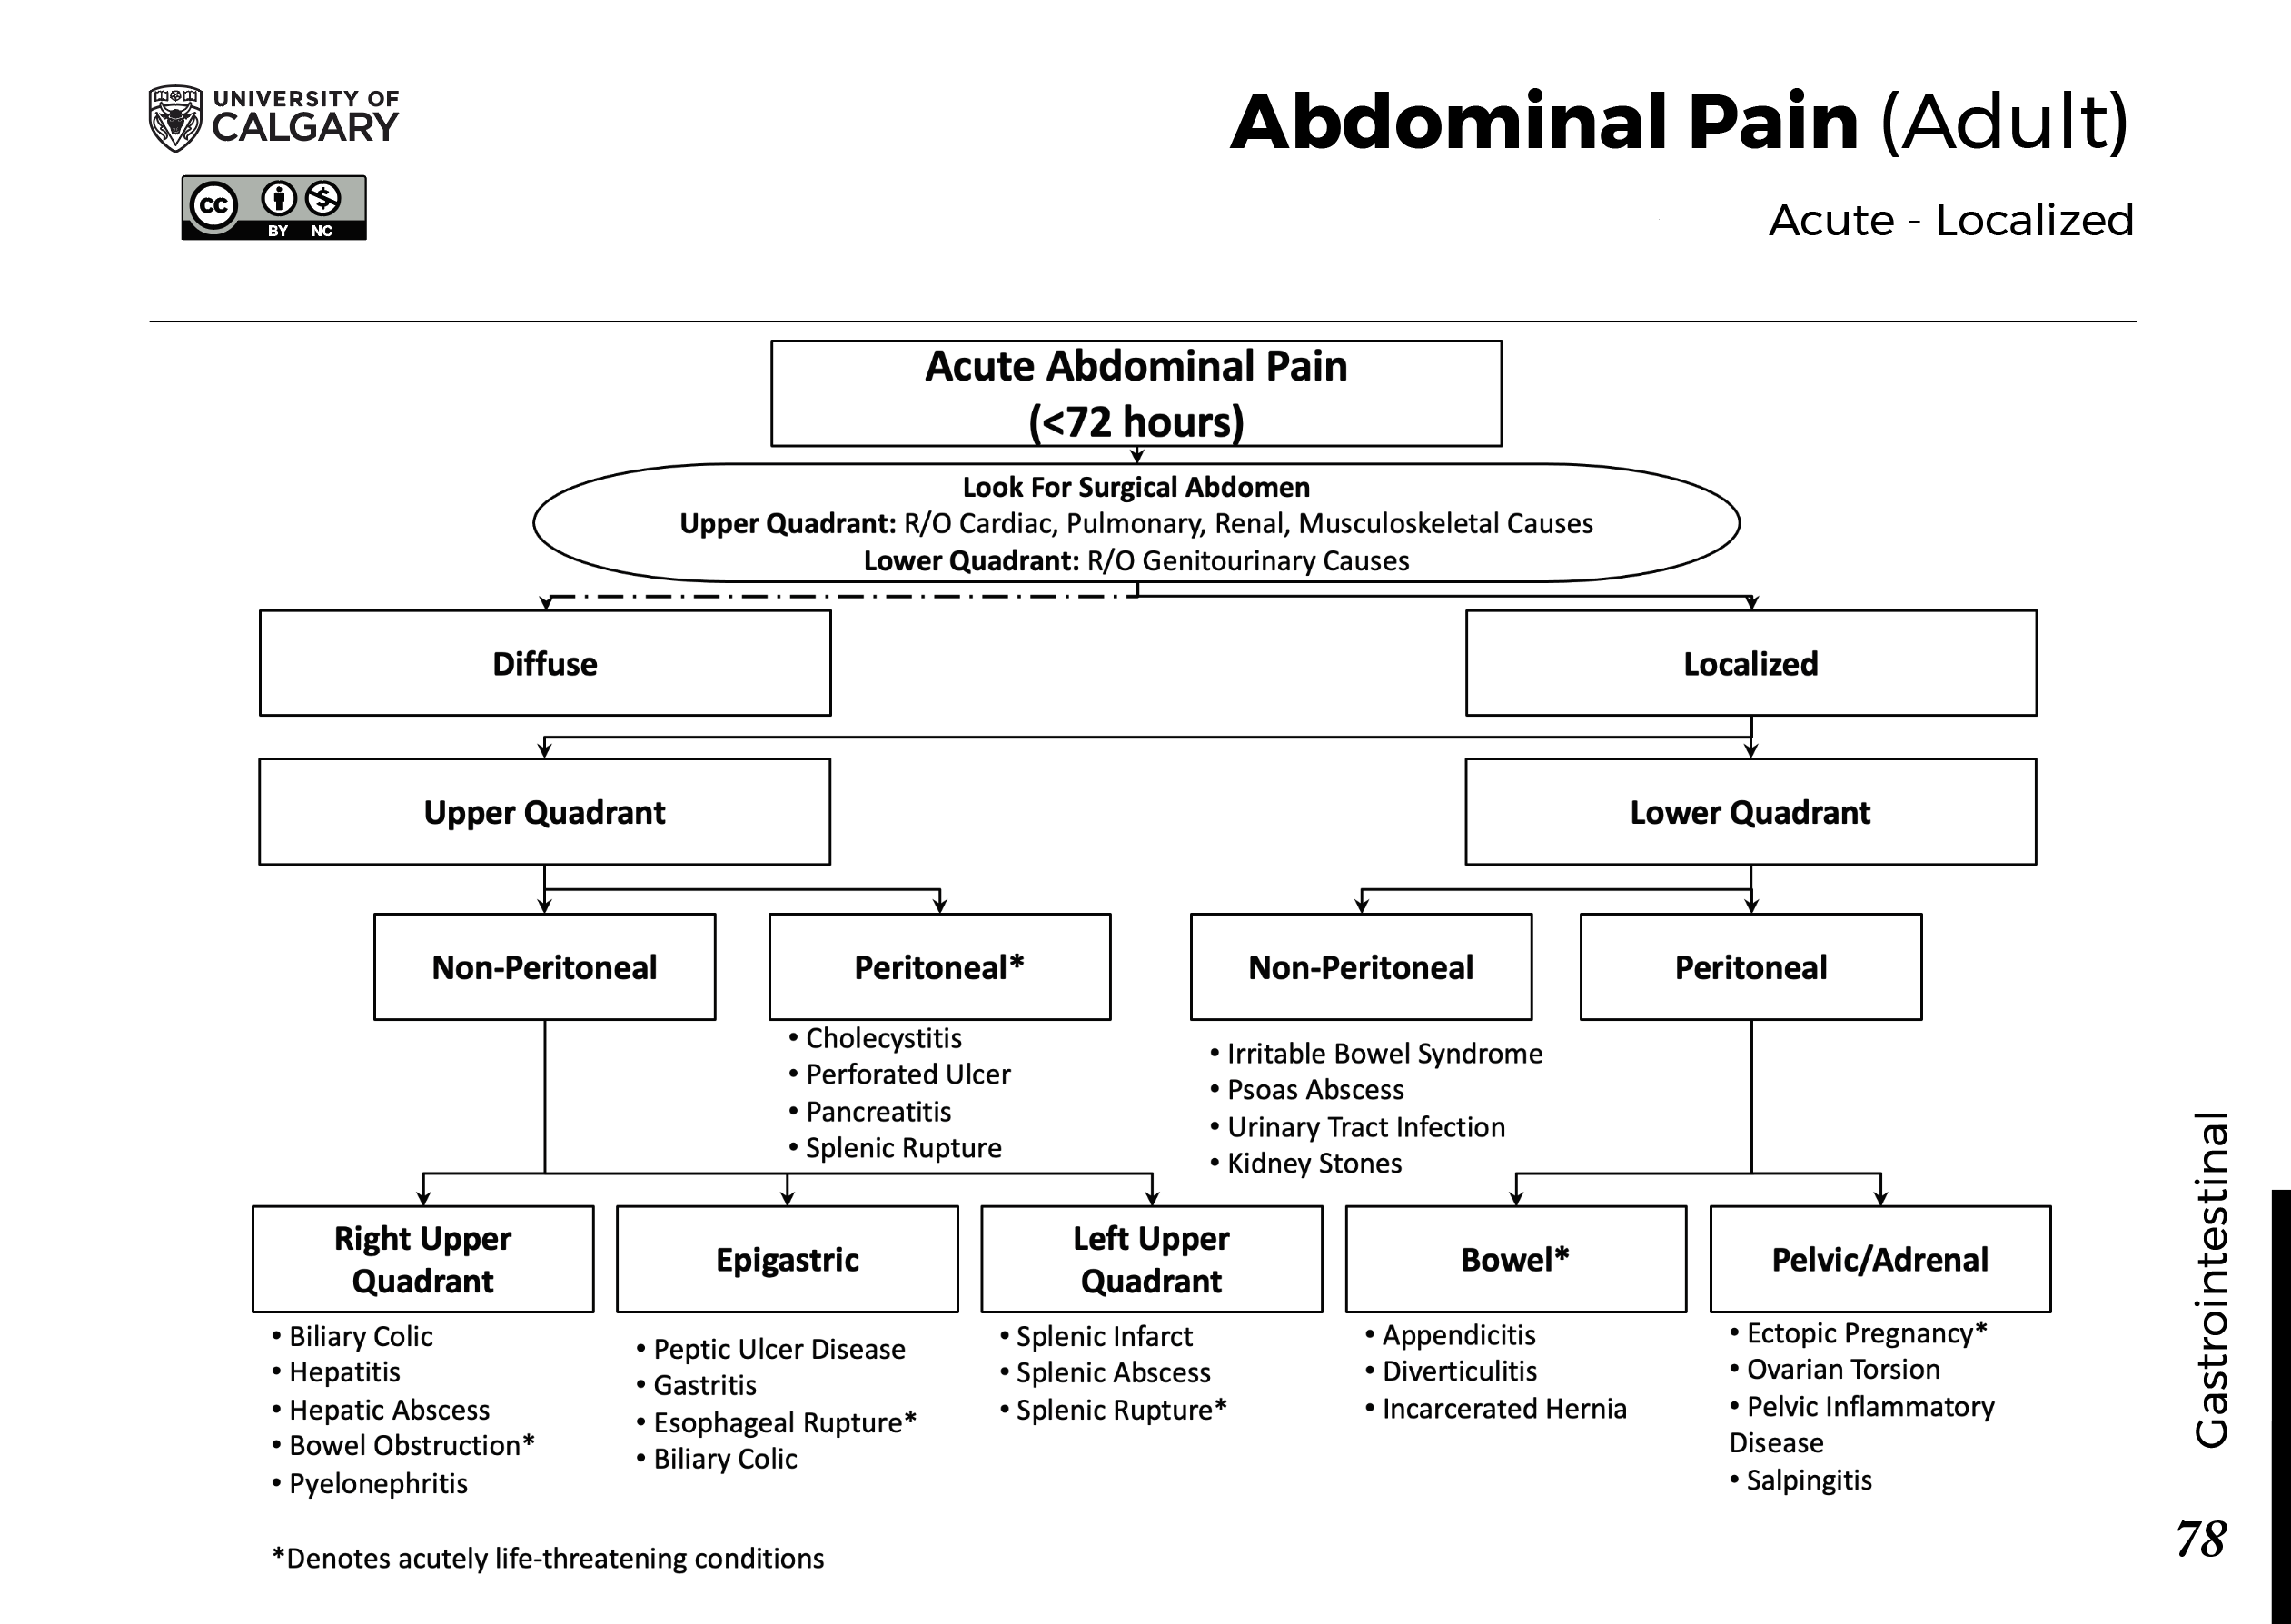 ABDOMINAL PAIN (ADULT): Acute – Localized Scheme